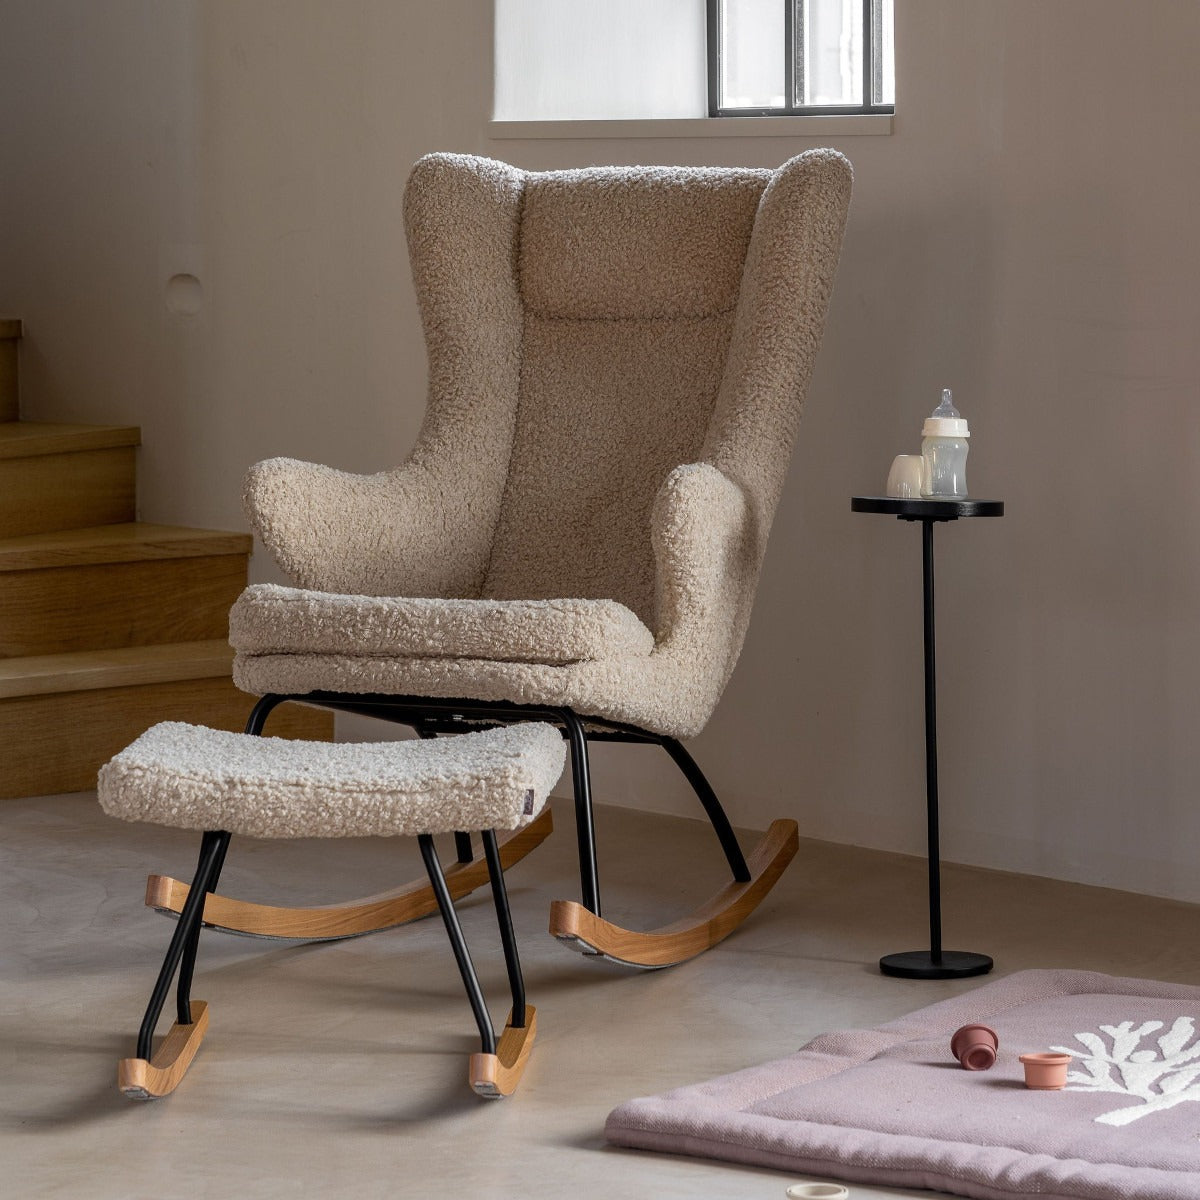 Quax Rocking Nursing Chair – Sheep NEW textured fabric - Tiny Tots Baby Store 